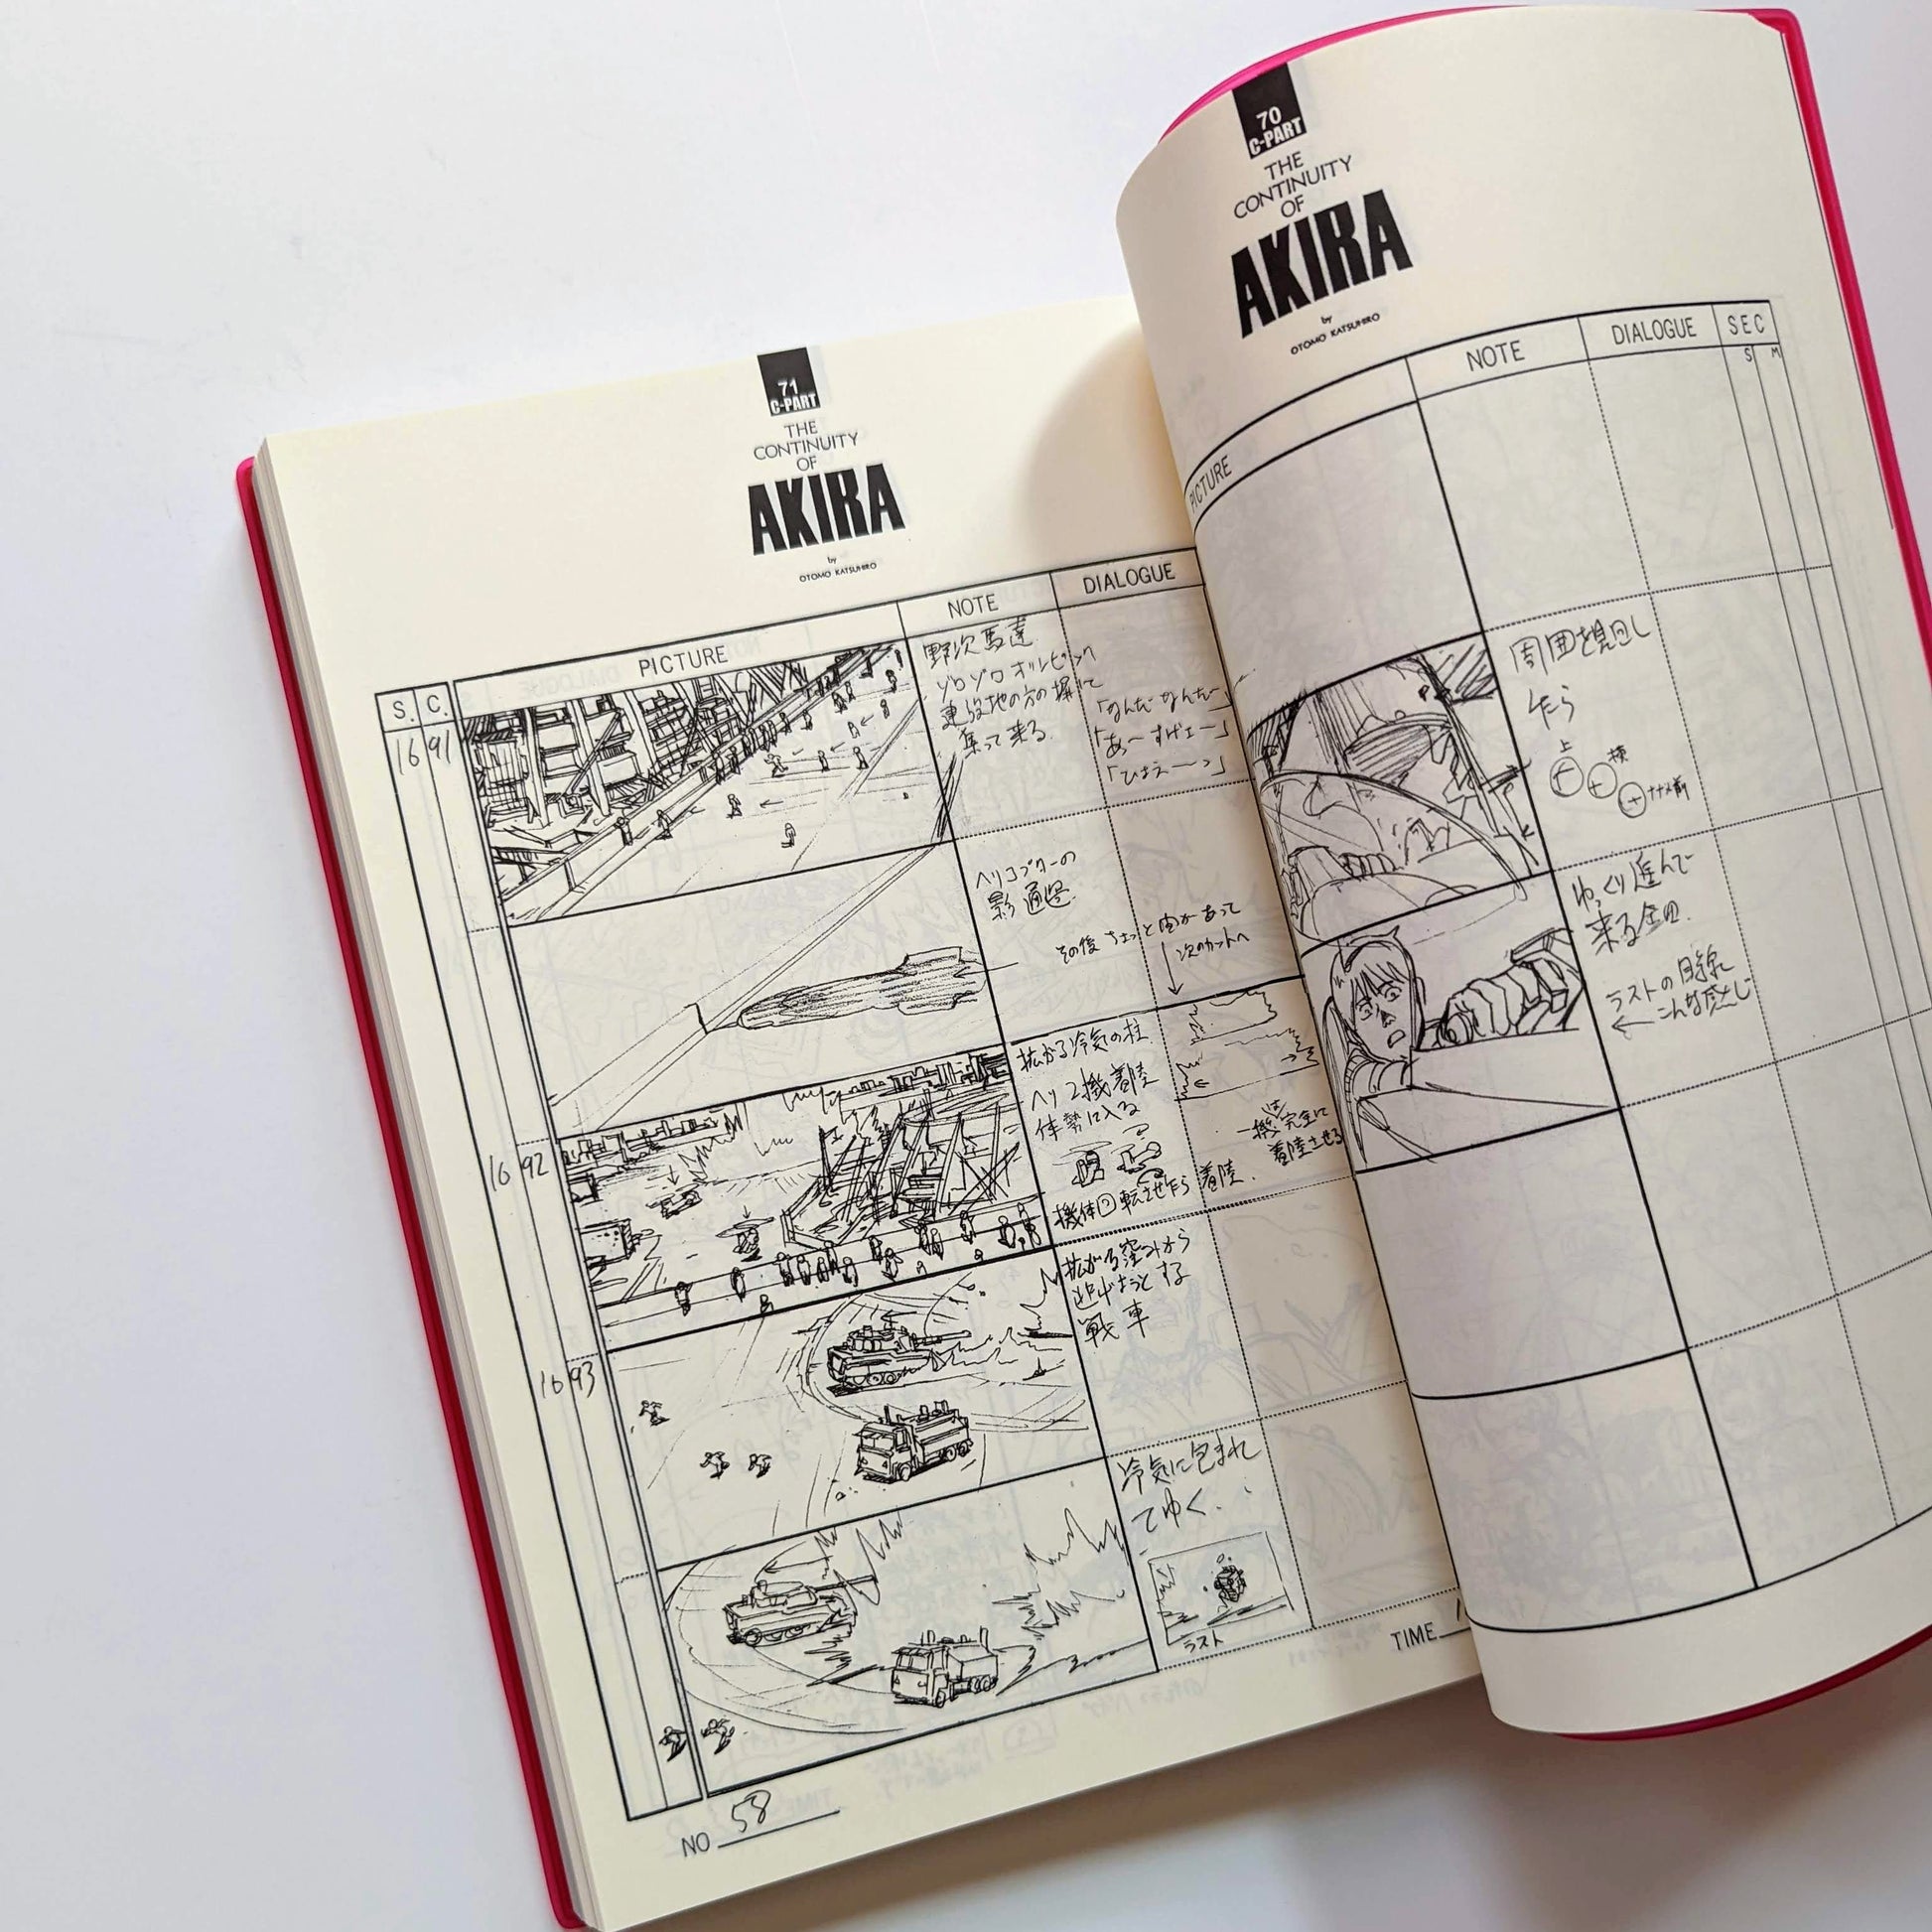 Otomo Complete Works No. 22: Akira Storyboards No. 2